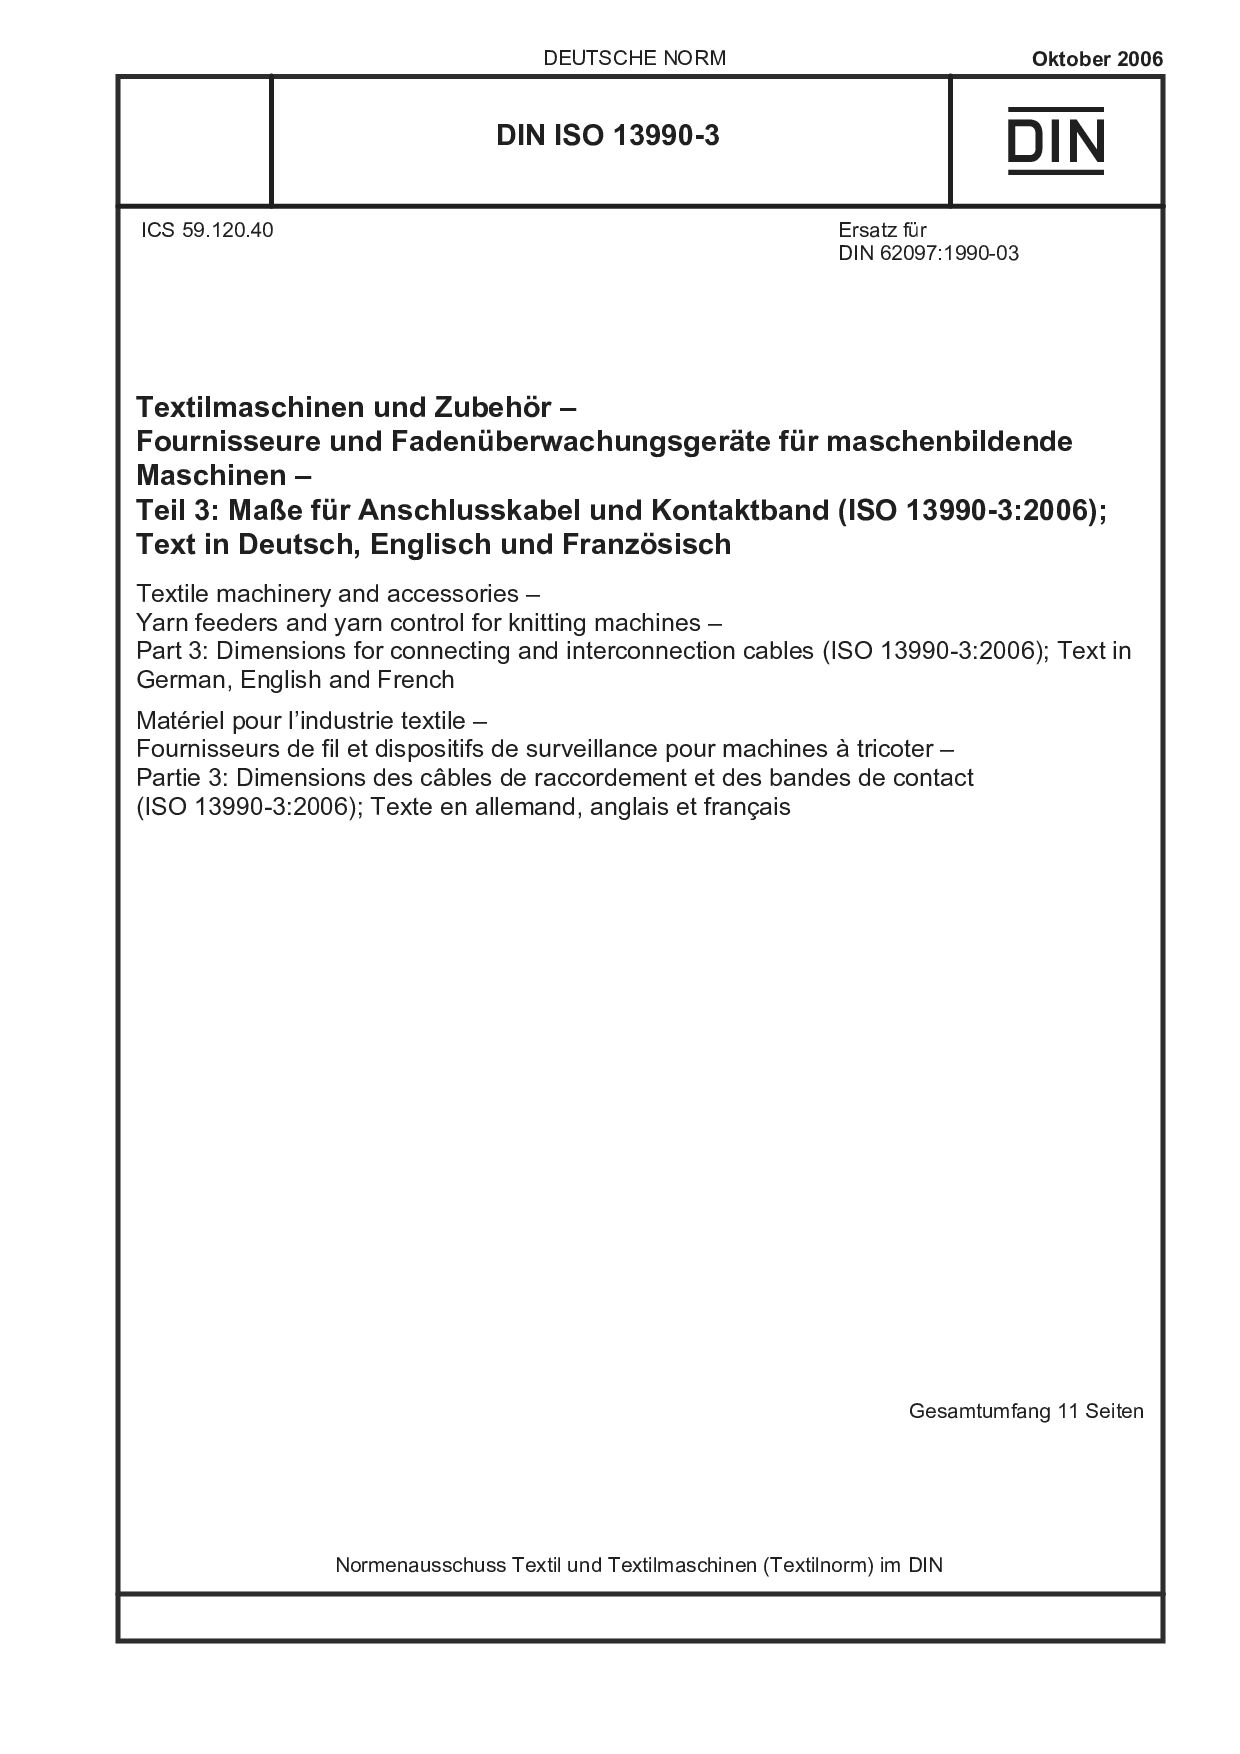 DIN ISO 13990-3:2006